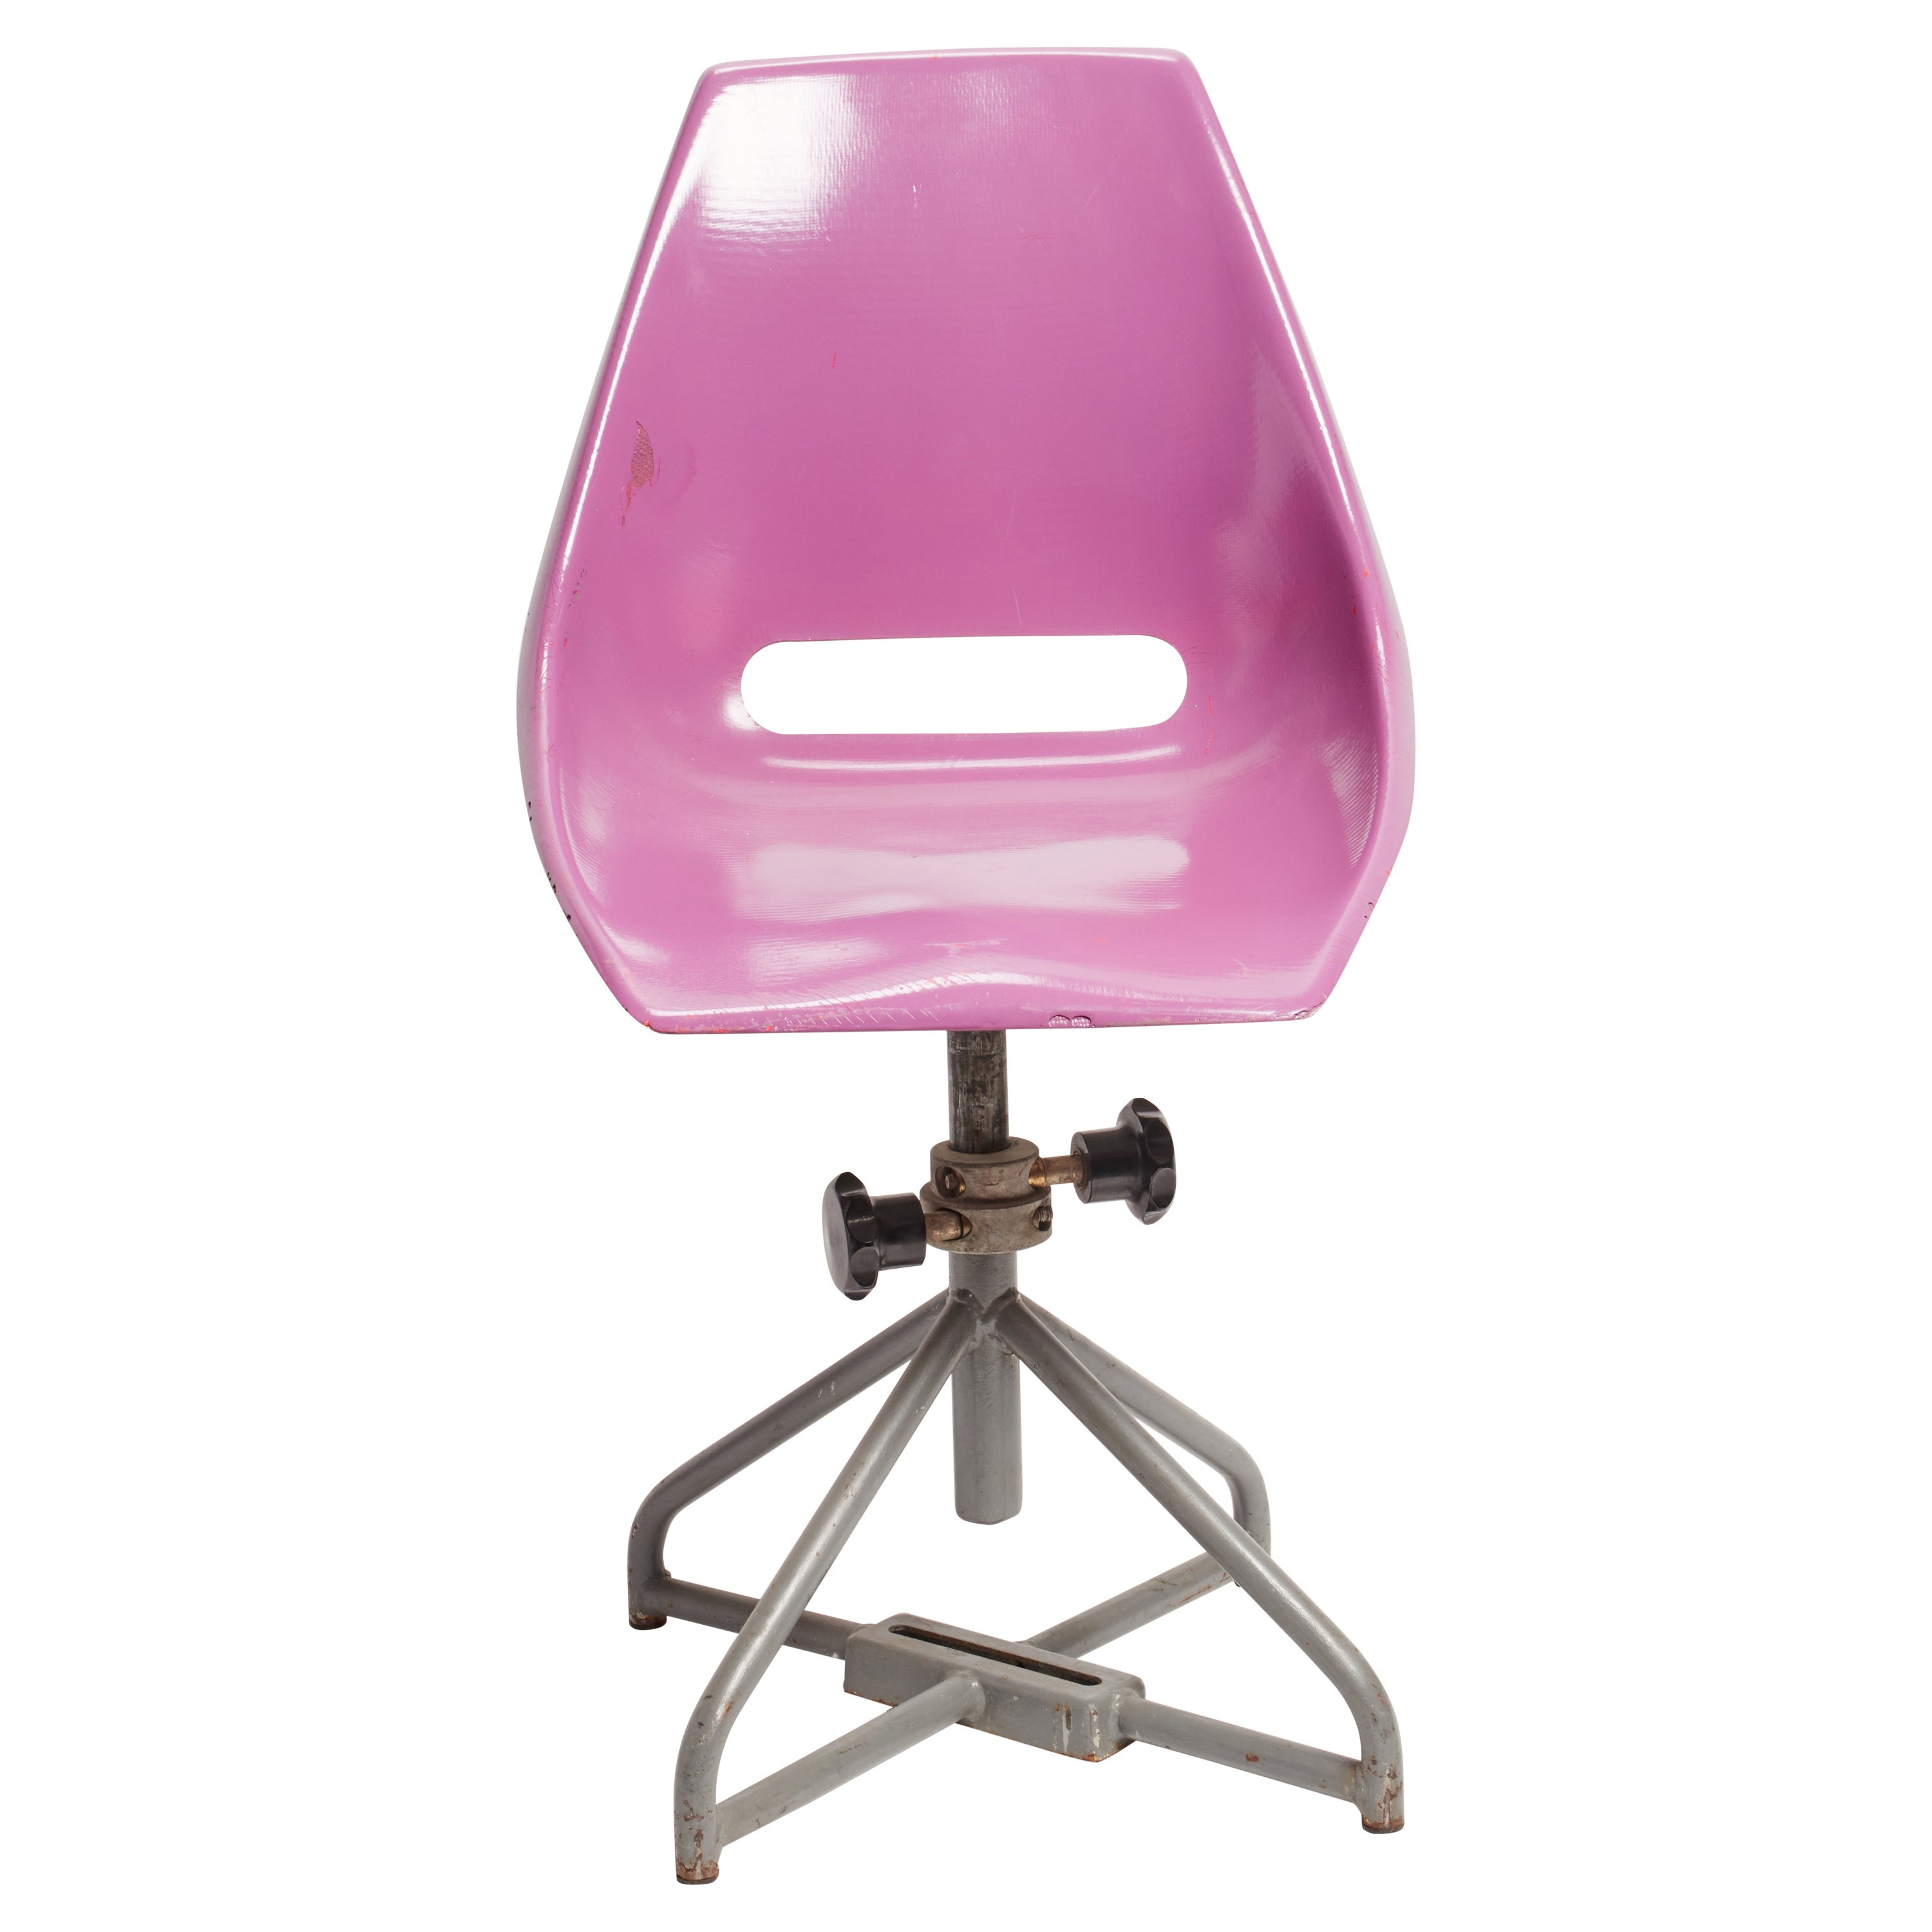 Multicolor Adjustable Fiberglass Chairs, Italy, 1950